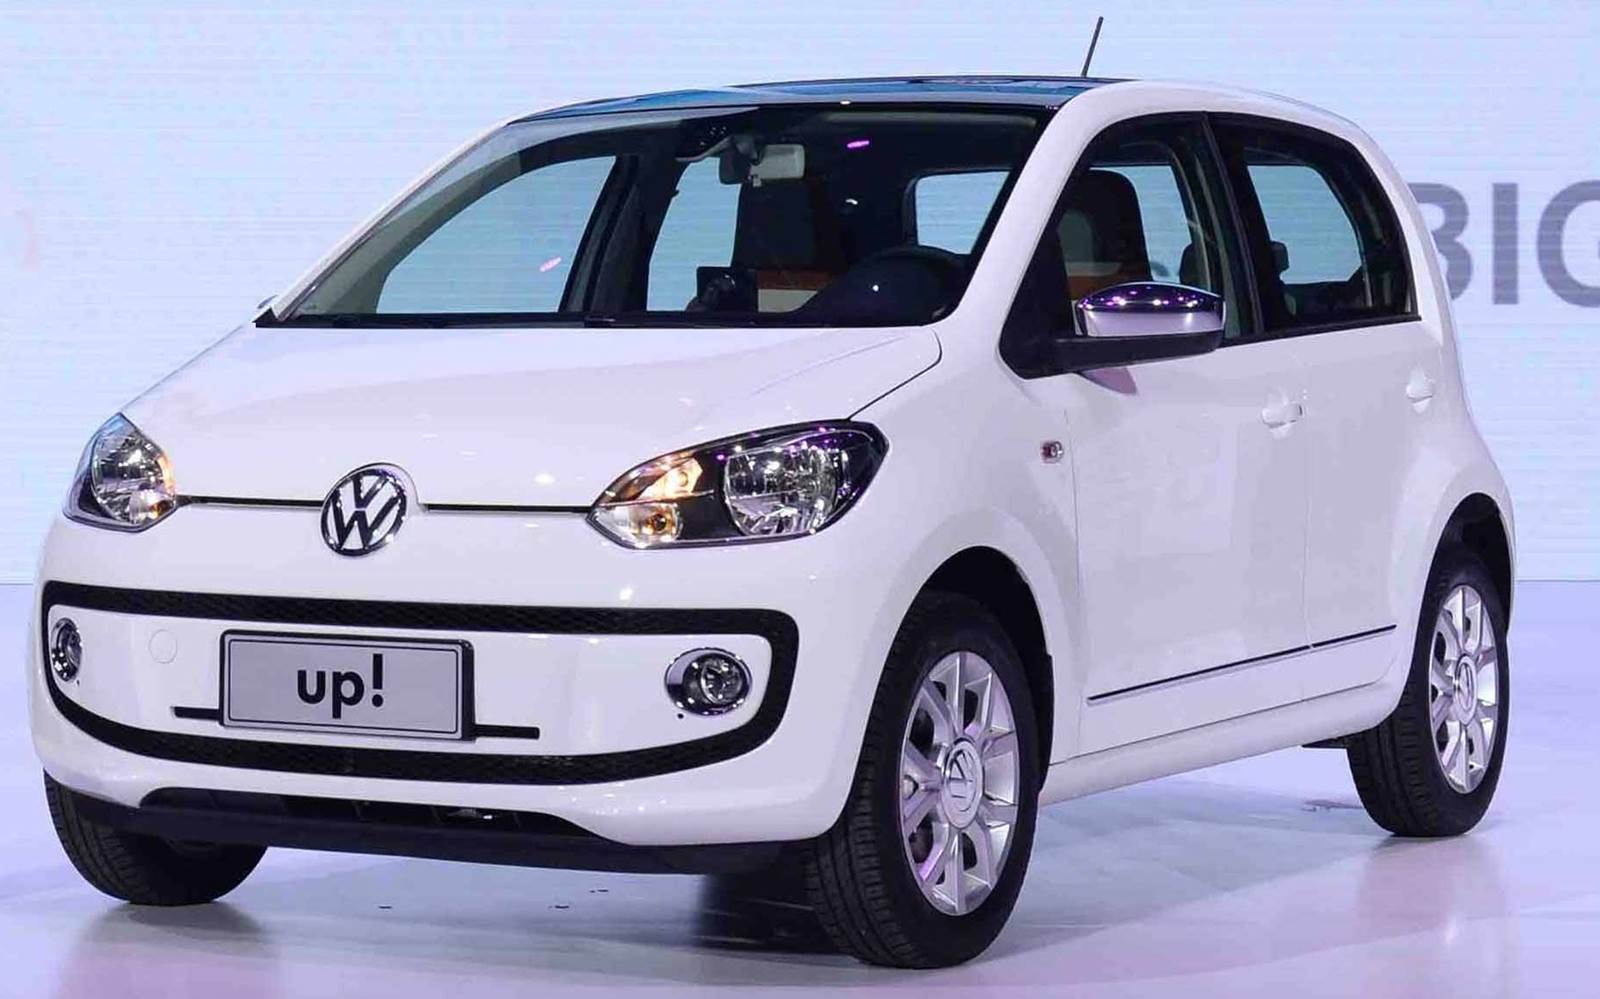 Volkswagen up! - China